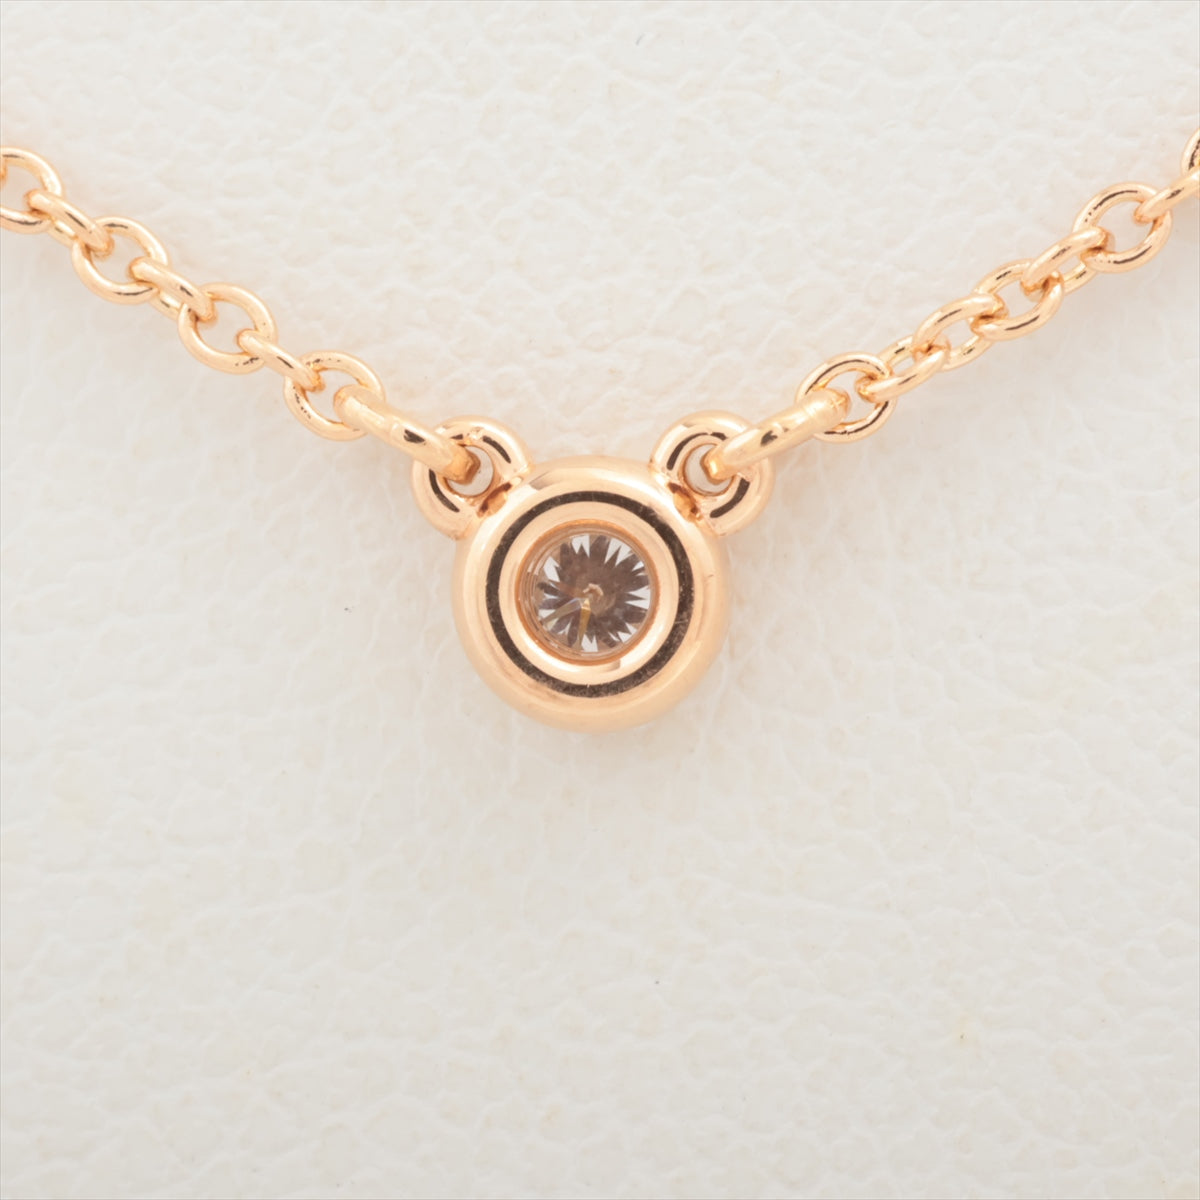 Tiffany Bazaar 1P diamond necklace 750 (PG) 2.1g diameter approximately 3.76mm